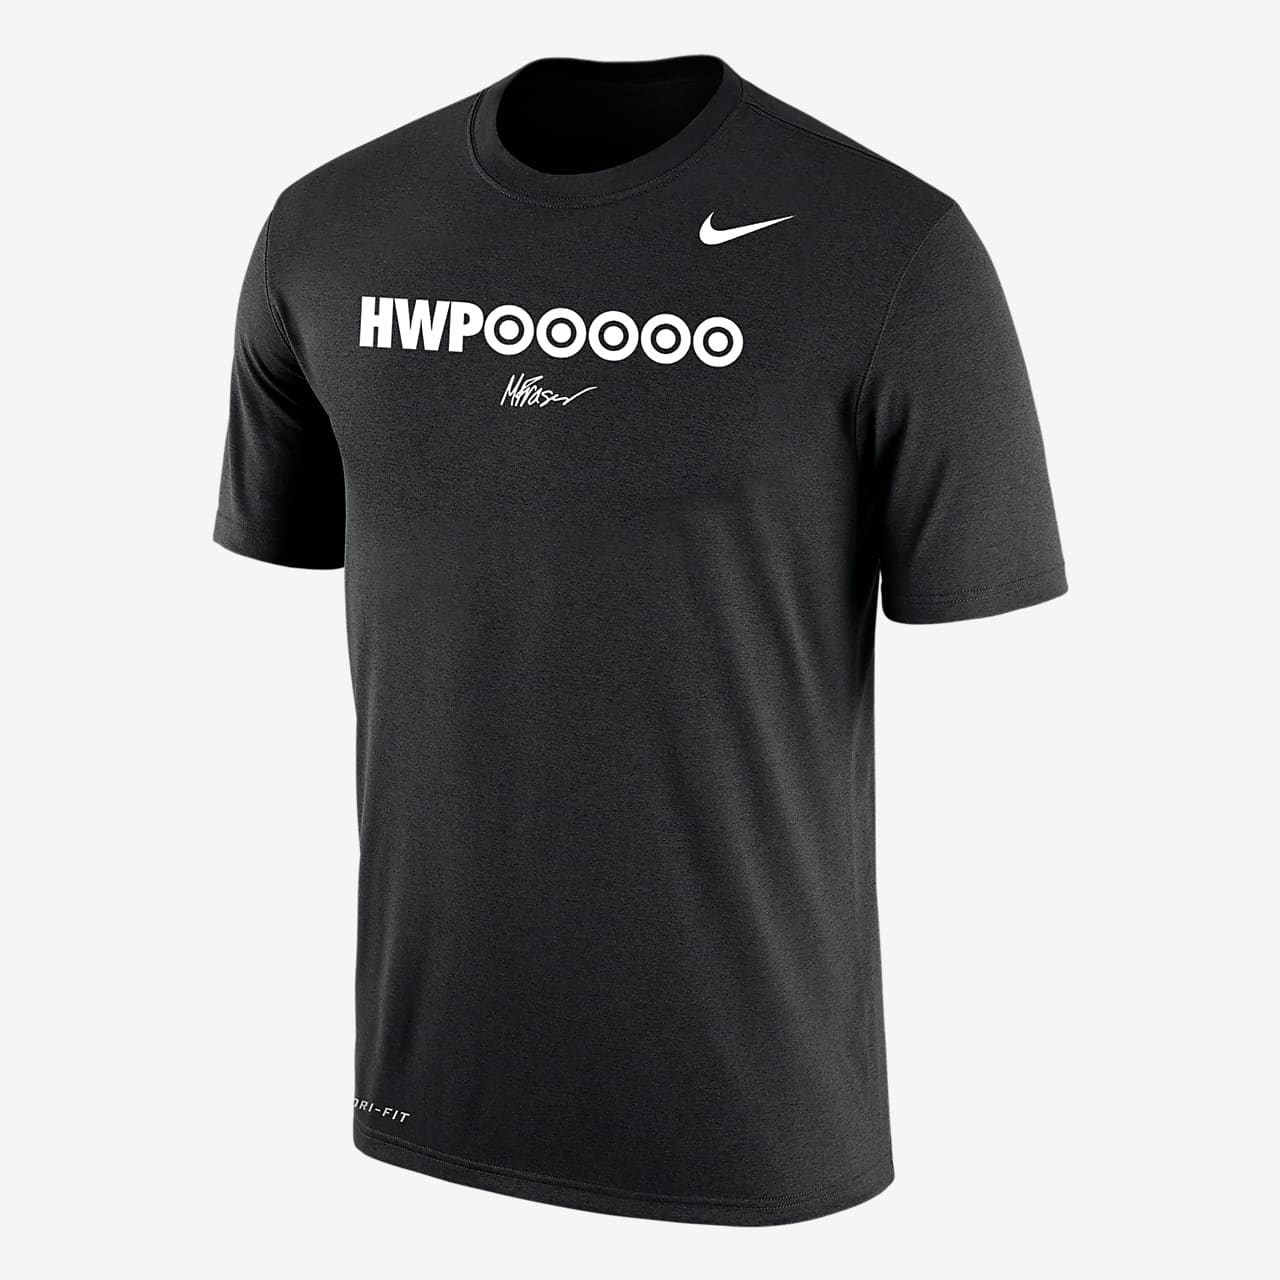 Nike "HWPO" Men's T-Shirt. Nike.com